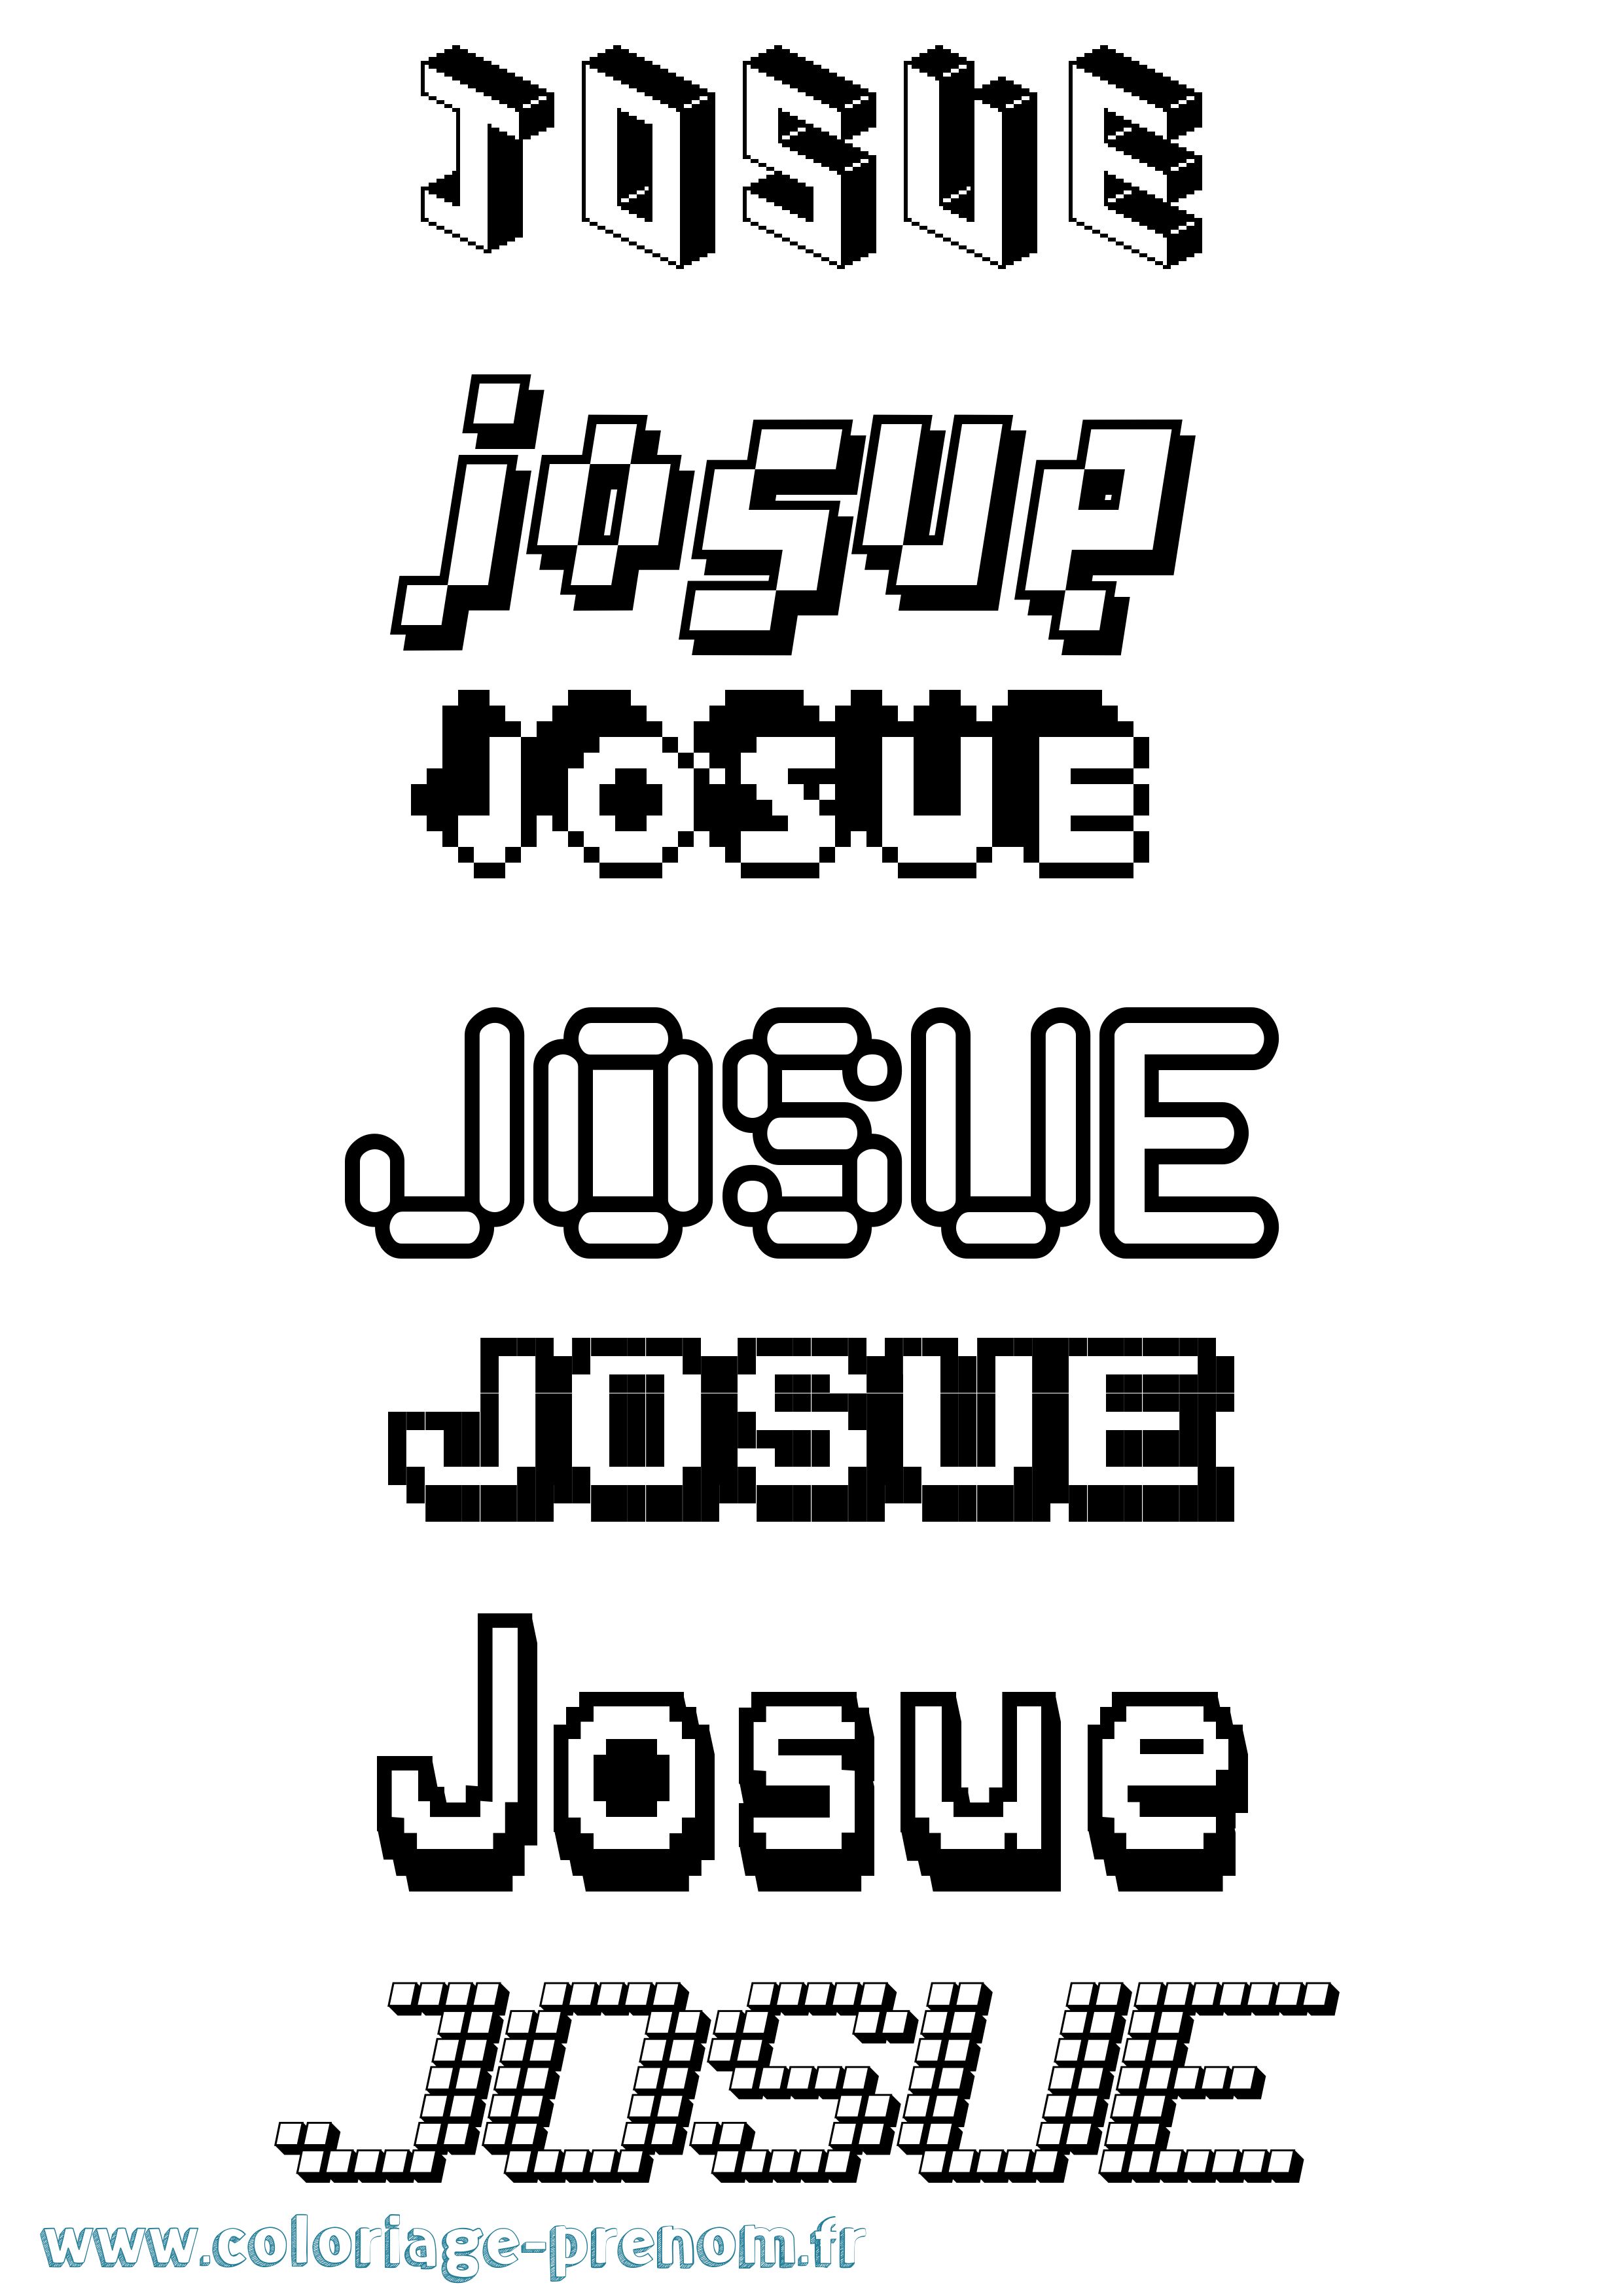 Coloriage prénom Josue Pixel